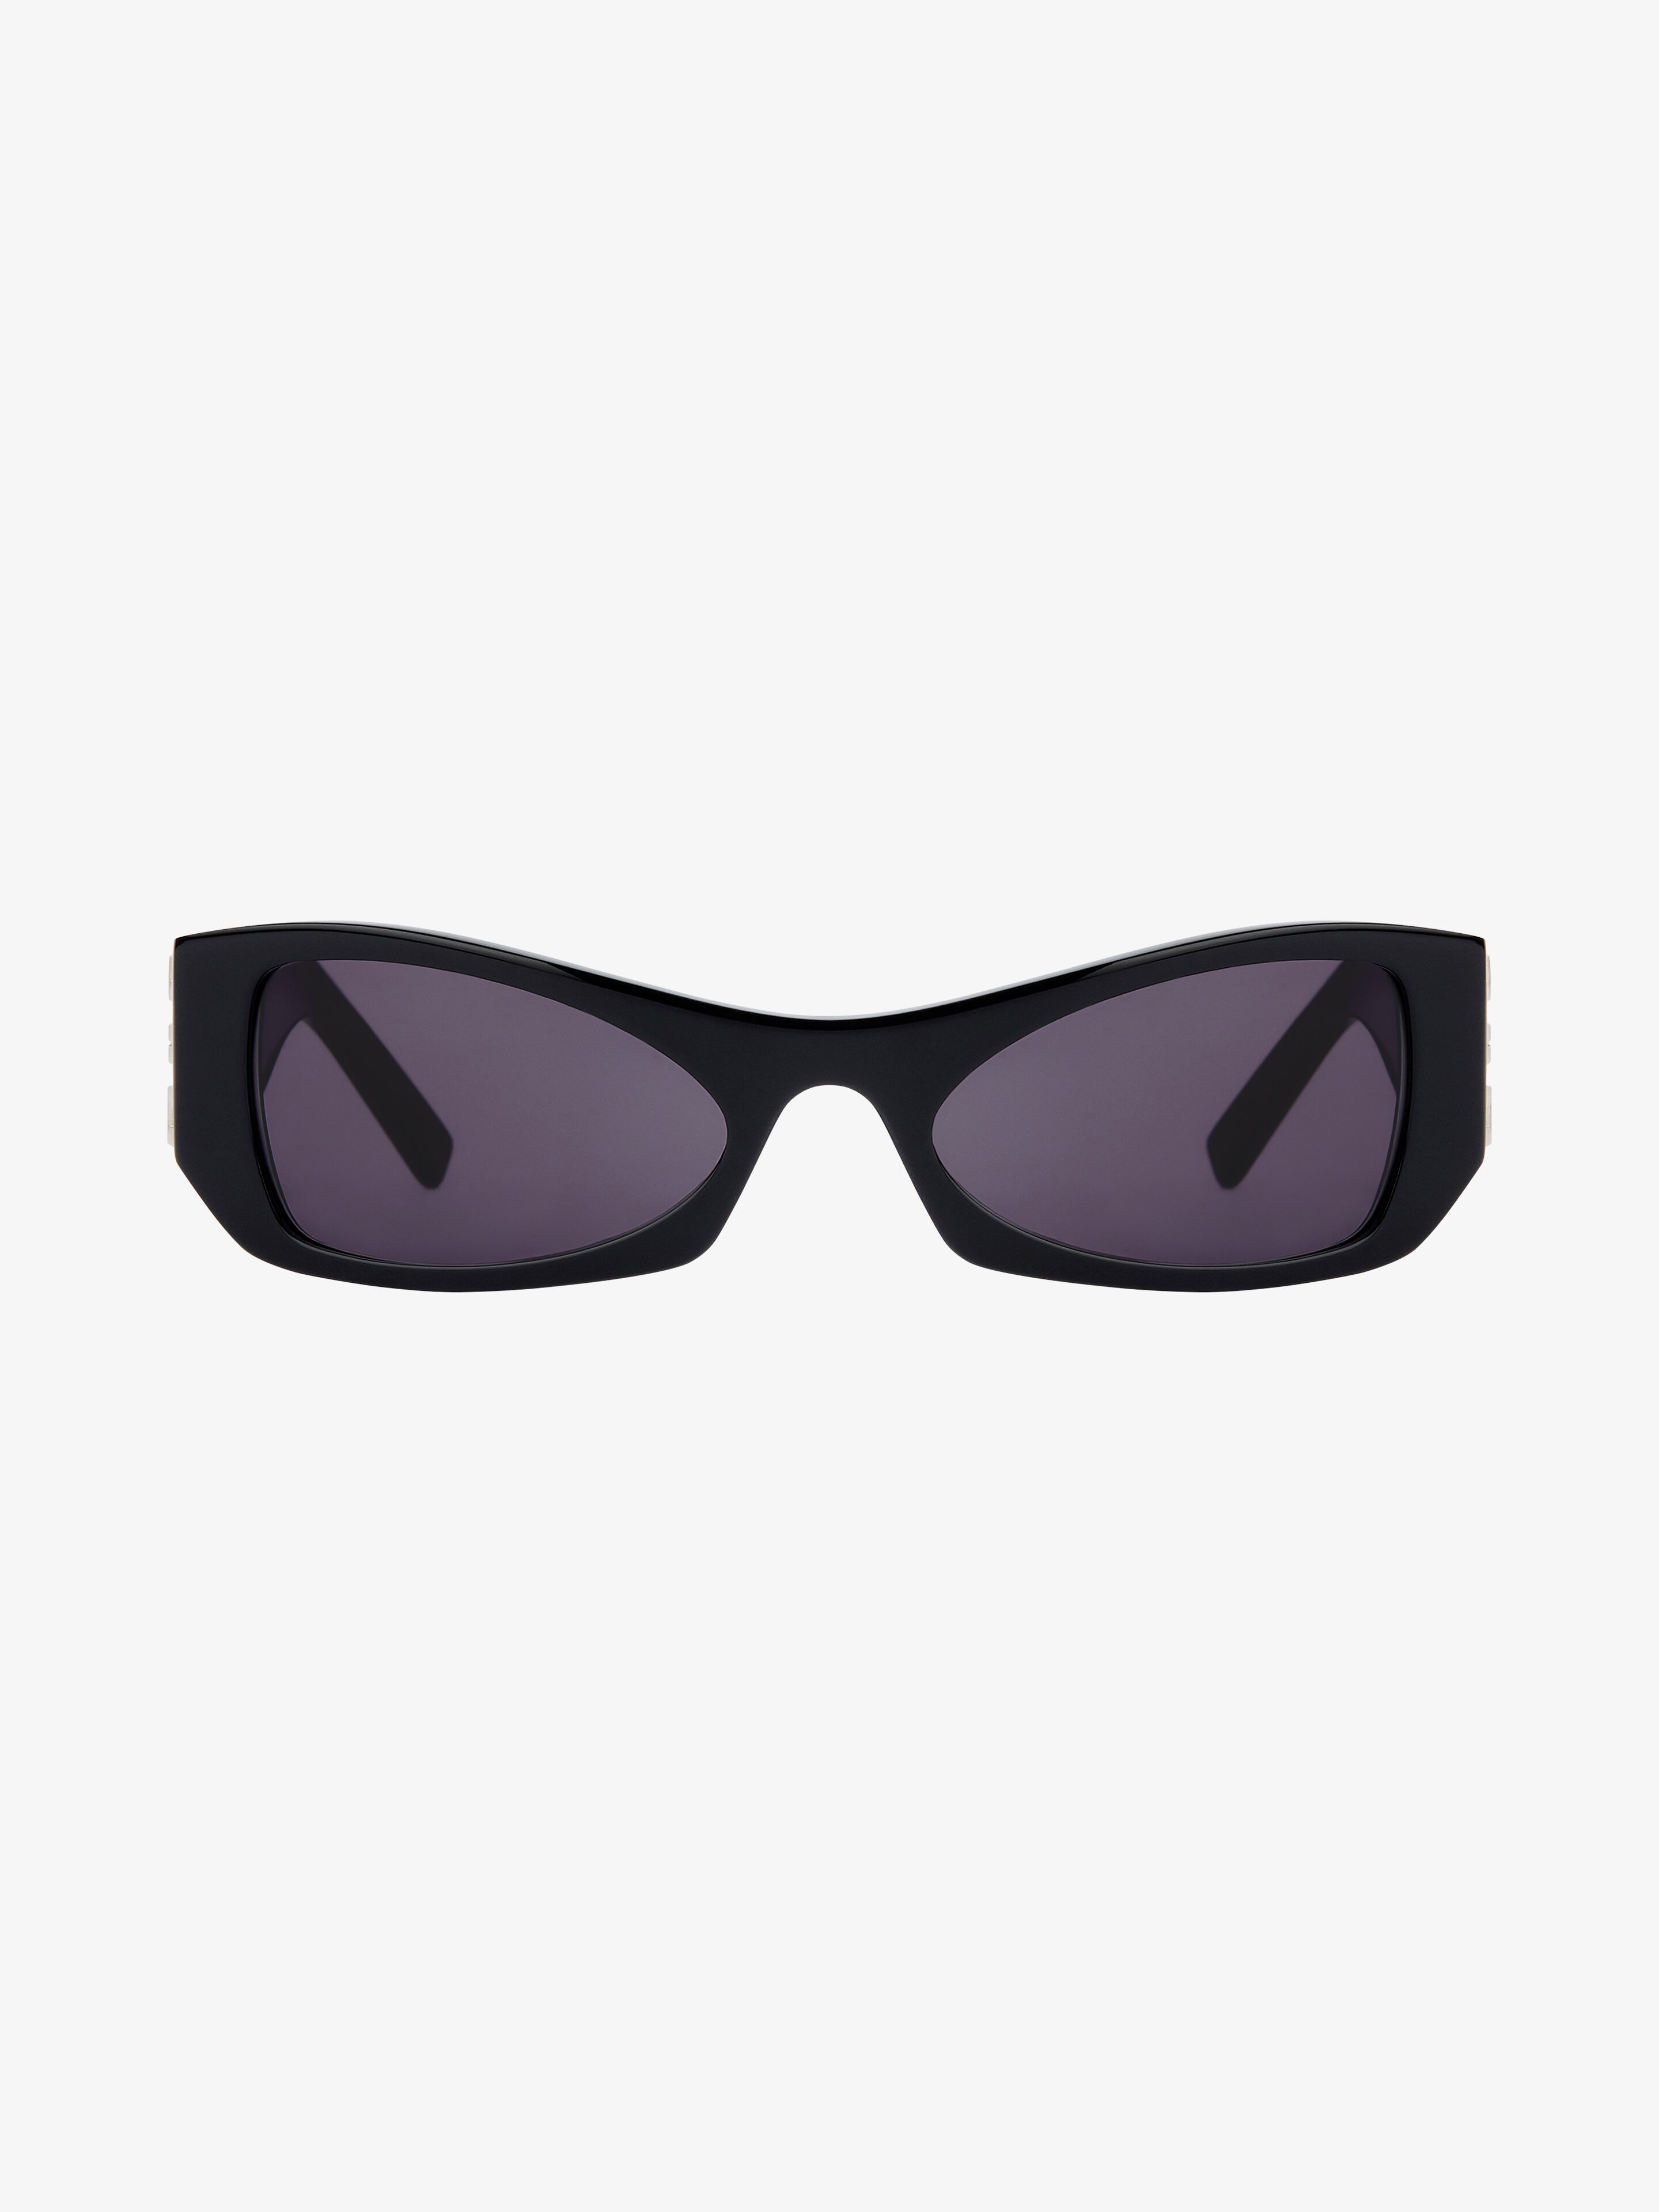 Giv Cut unisex sunglasses in nylon - black | Givenchy